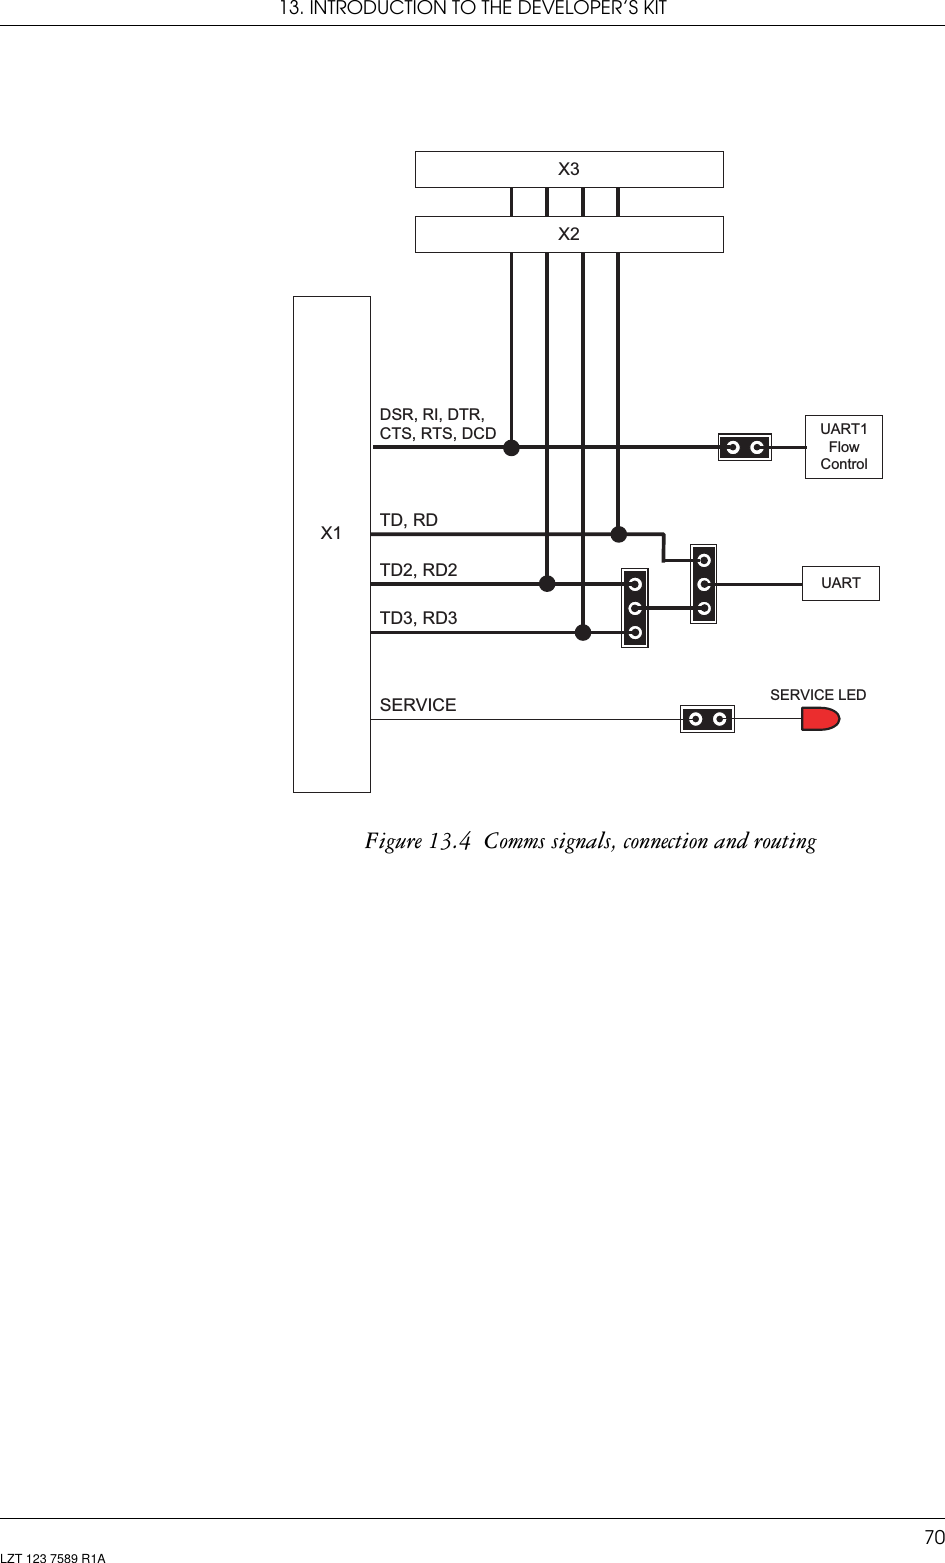 13. INTRODUCTION TO THE DEVELOPER’S KIT70LZT 123 7589 R1AFigure 13.4  Comms signals, connection and routingX3X2UART1FlowControlDSR, RI, DTR,CTS, RTS, DCDTD, RDTD2, RD2TD3, RD3UARTSERVICE LEDSERVICEX1